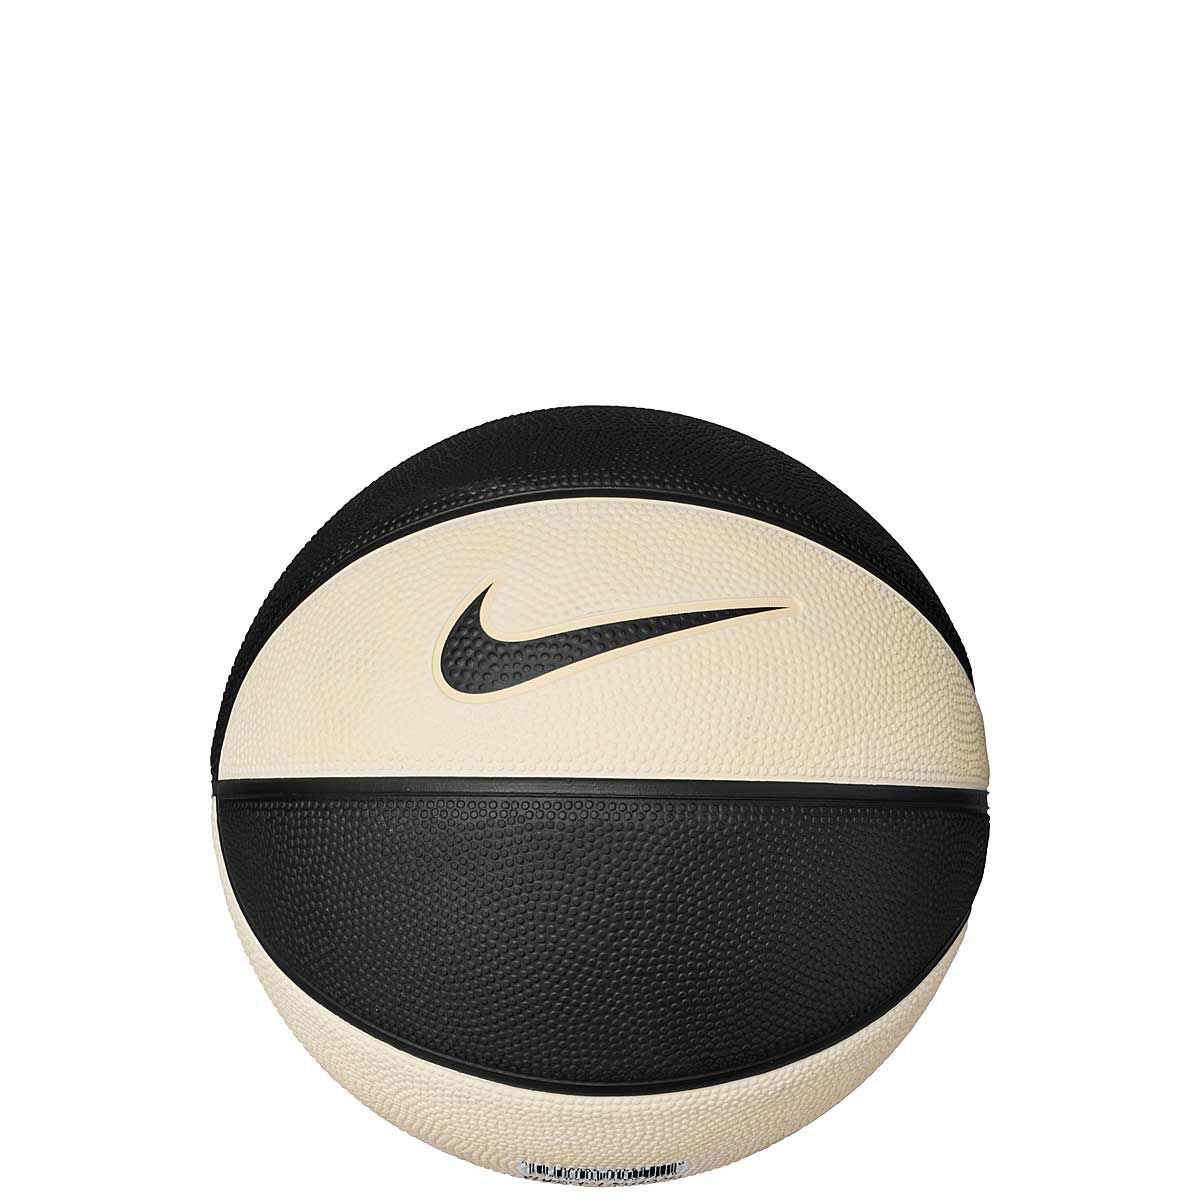 Buy Swoosh SKILLS Mini Basketball for GBP 12.90 on KICKZ.com!